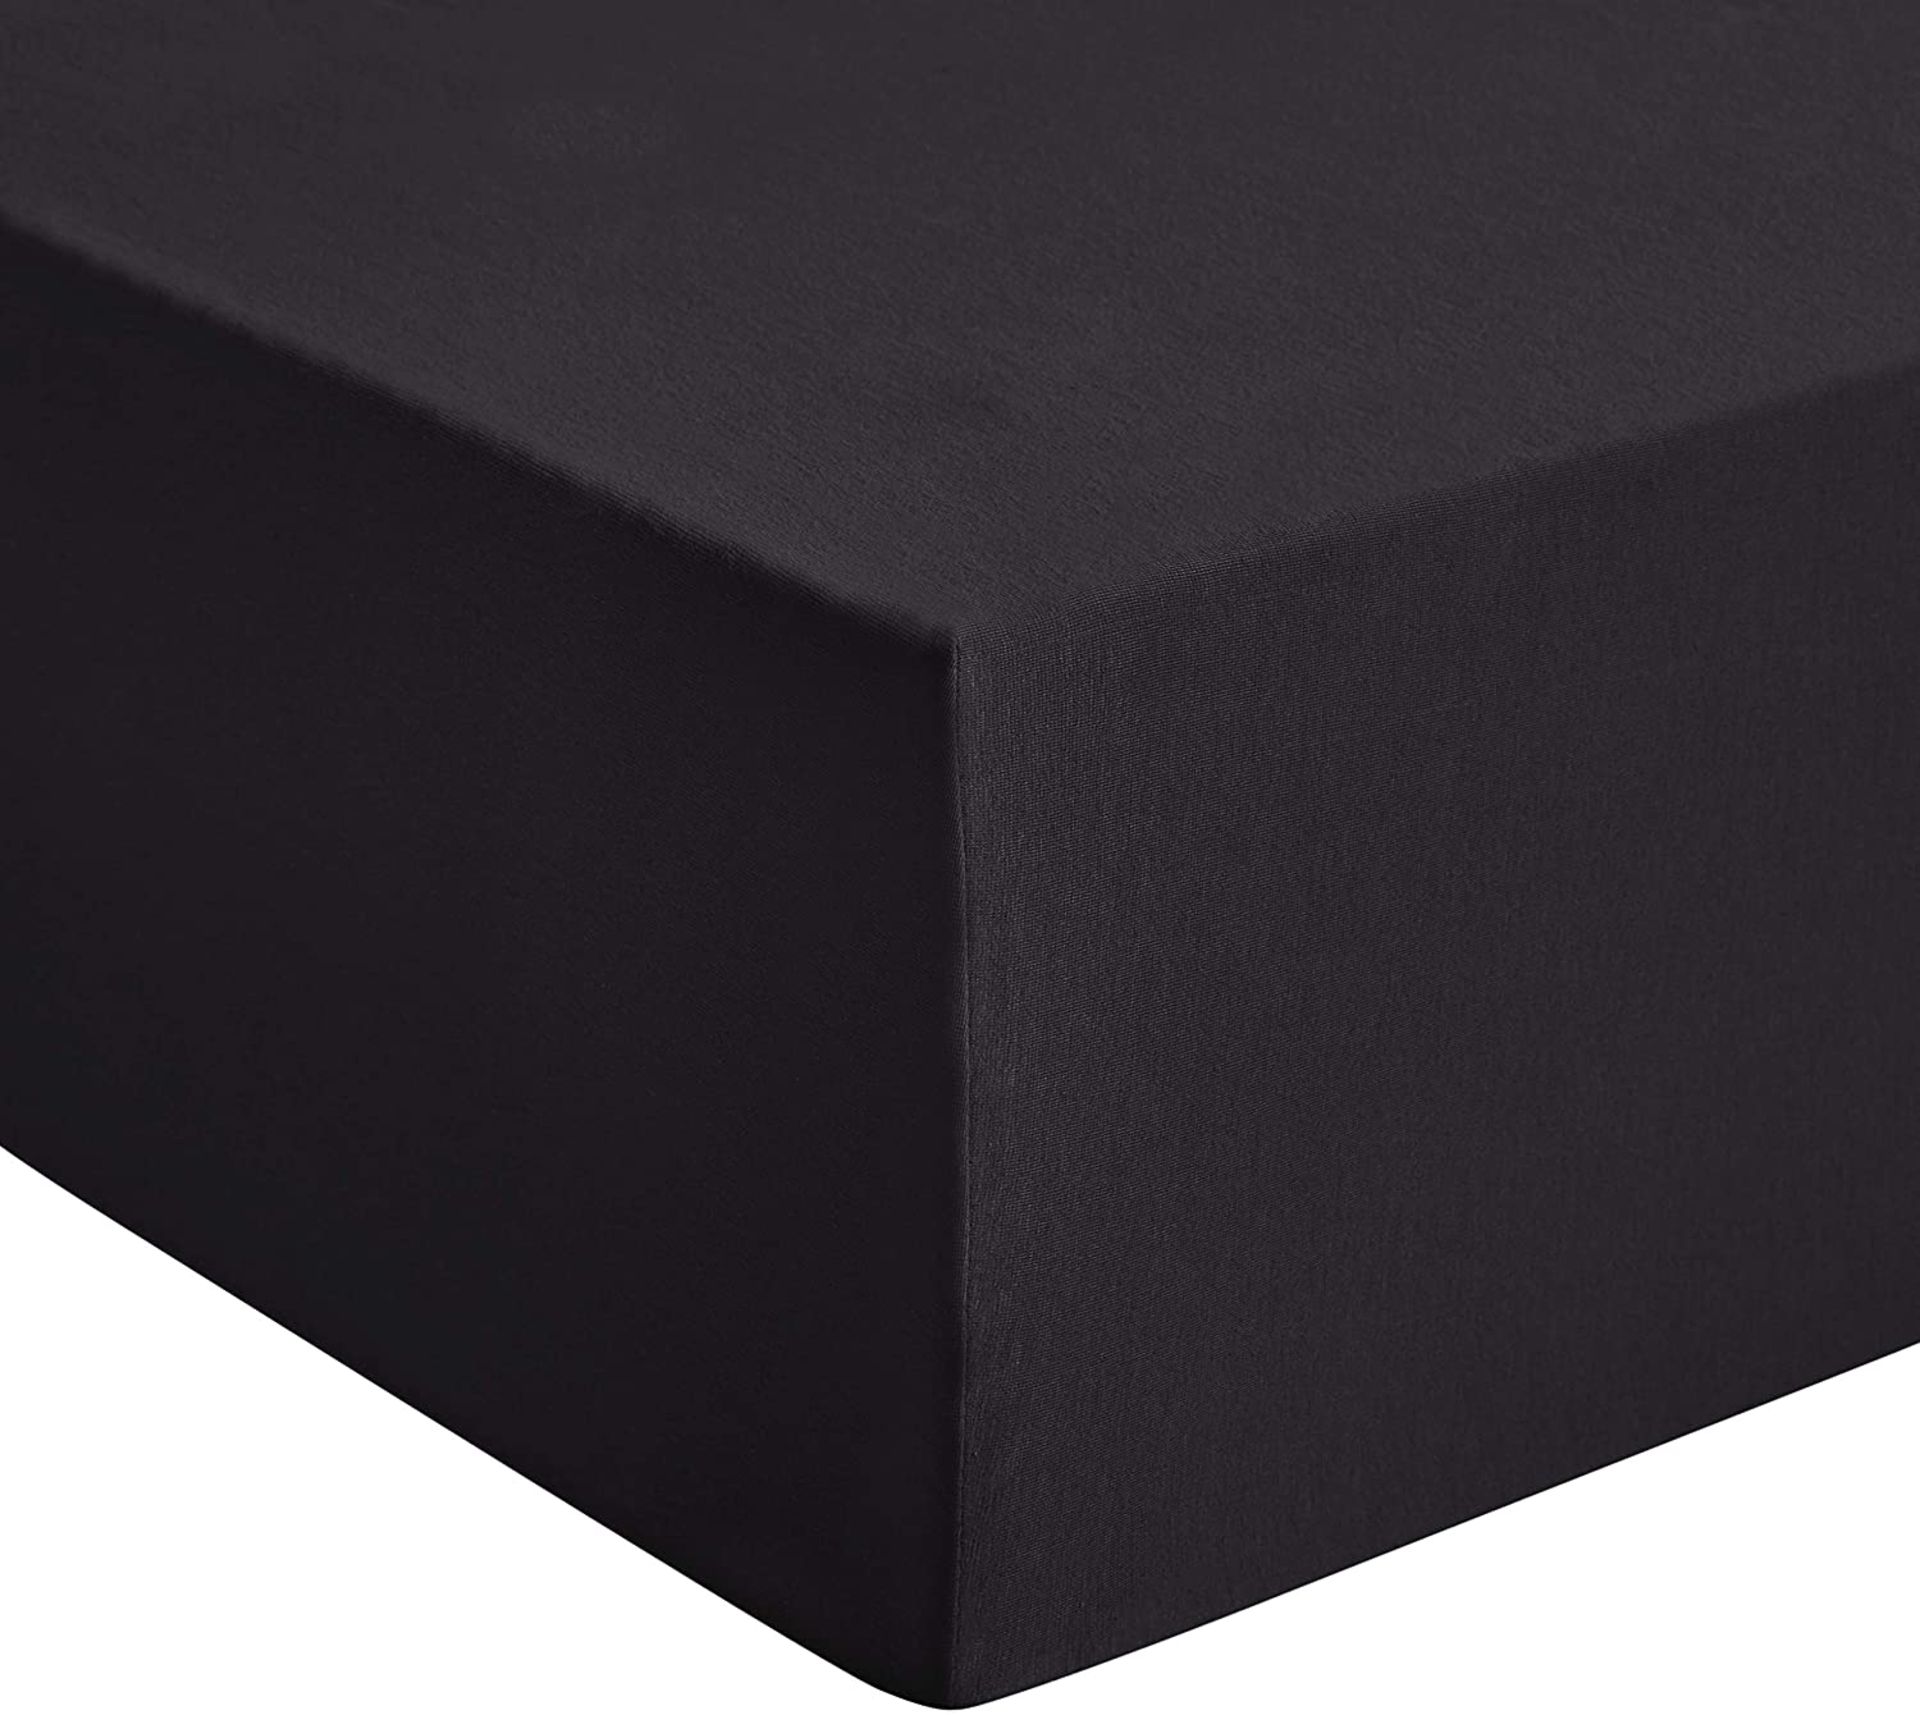 AmazonBasics Jersey Premium Fitted Sheet, Black - 150 x 200 cm, King